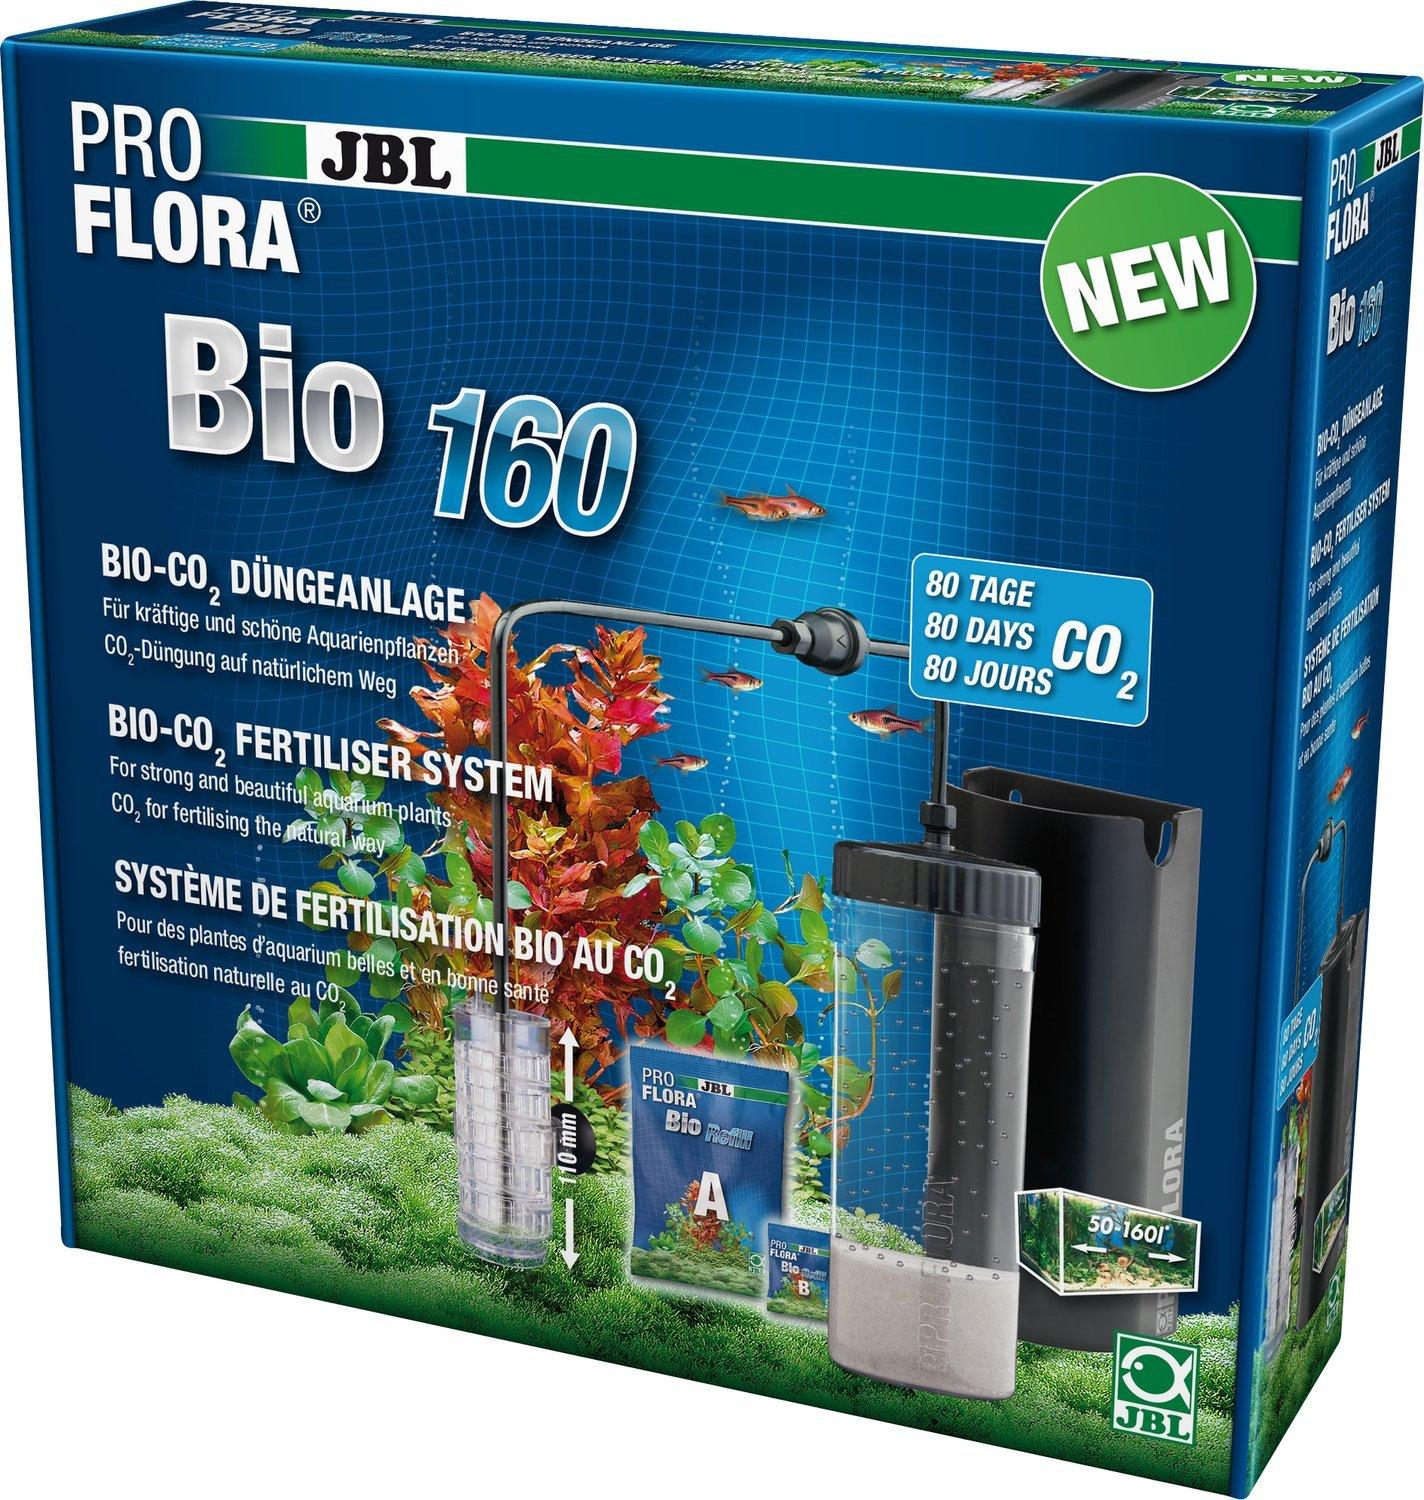 JBL ProFlora Bio160 2 Test: ❤️ TOP Angebote ab 33,95 € (Mai 2022)  Testbericht.de